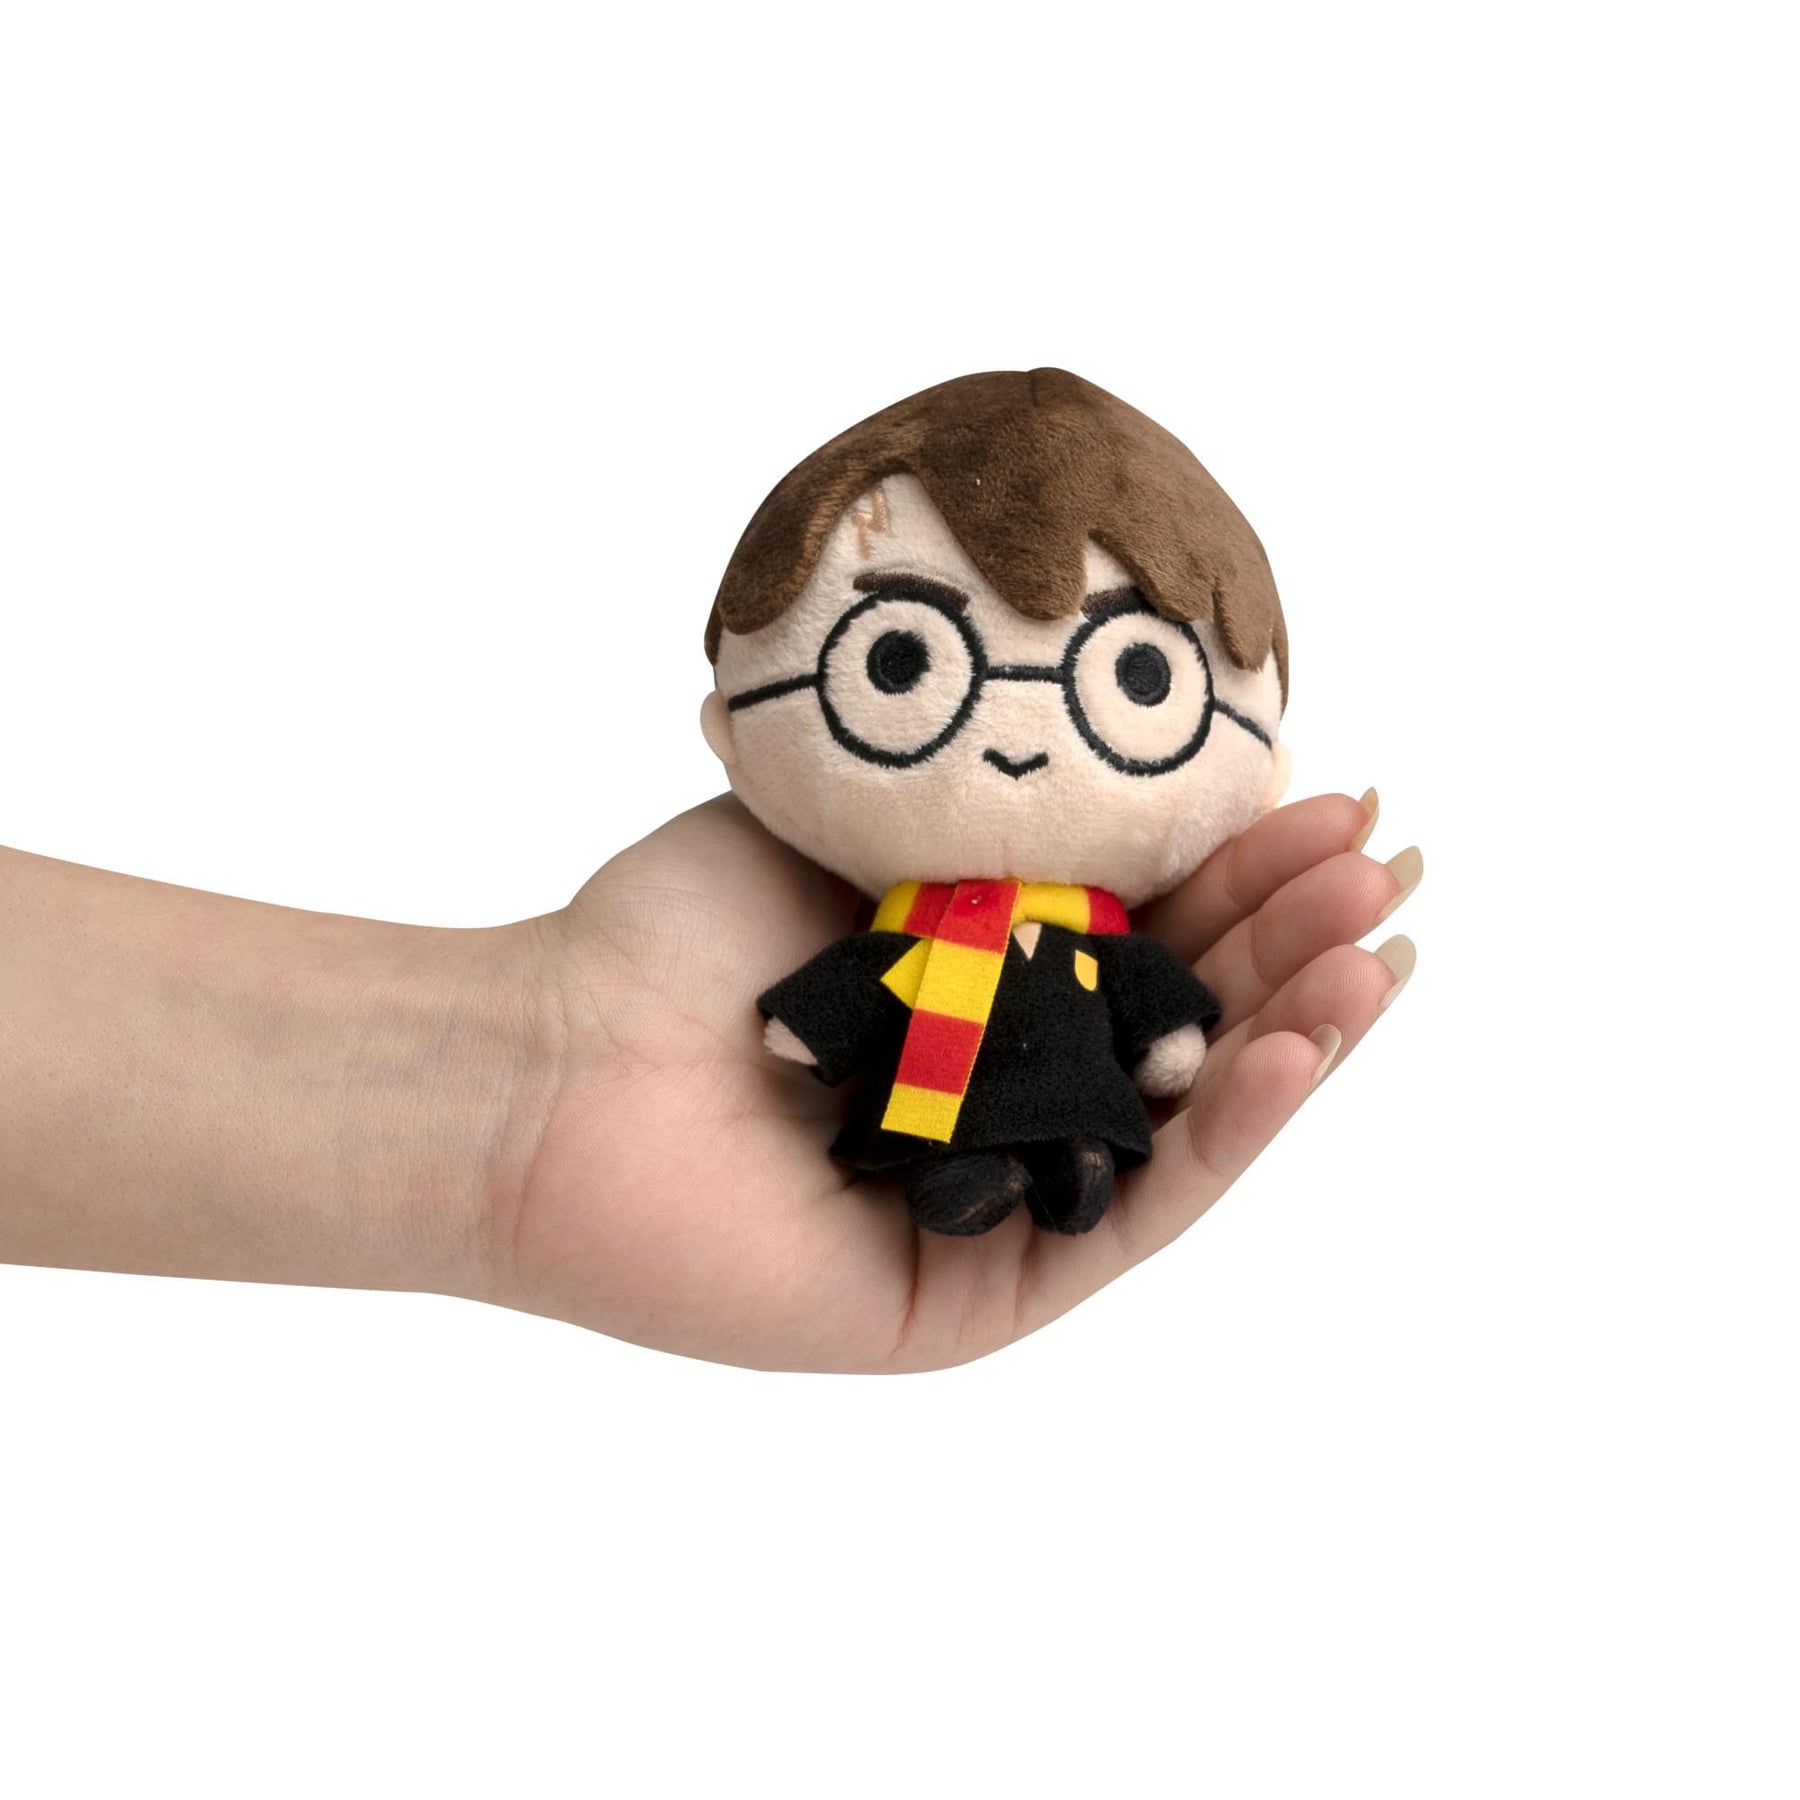 Harry Potter 4 Inch Plush Chibi Keychain | Harry Potter